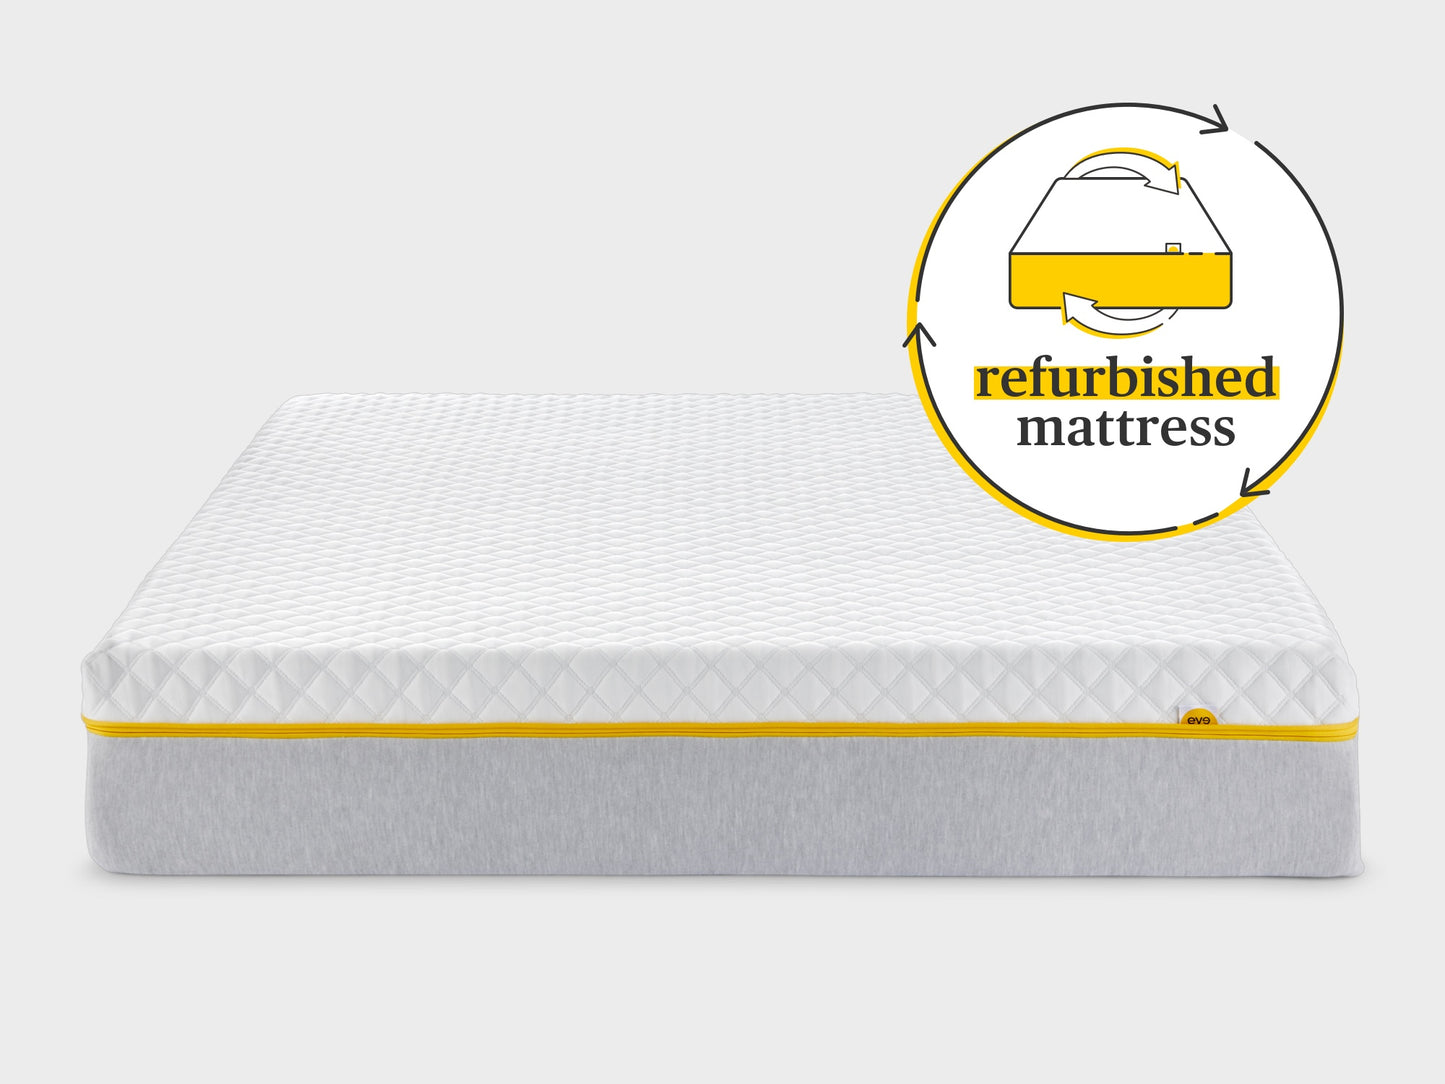 refurbished - the premium hybrid mattress